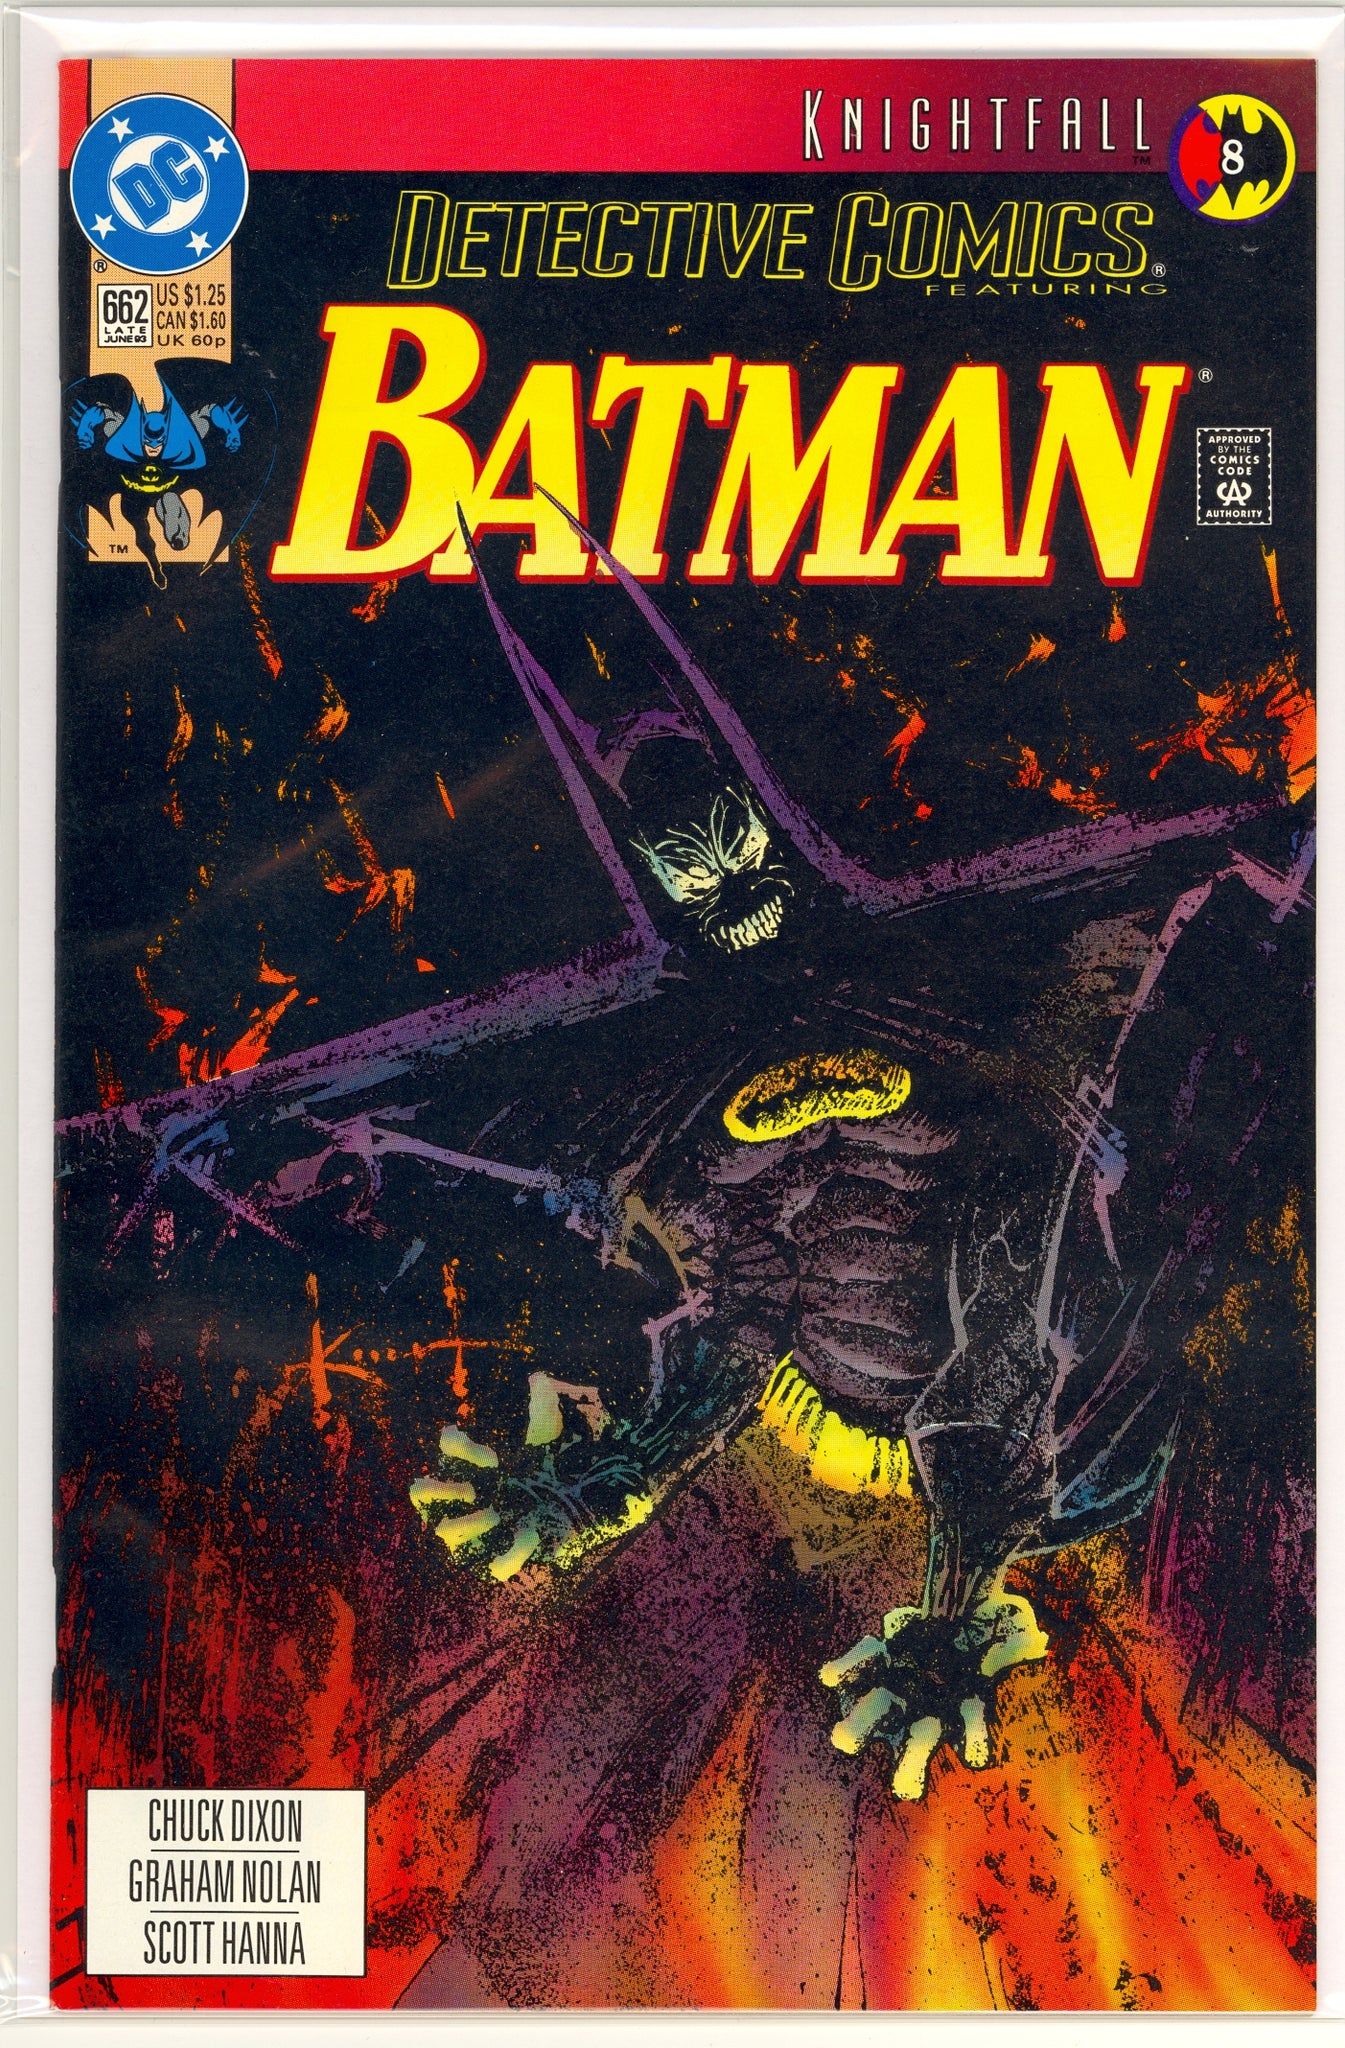 Detective Comics #662 (1993) Knightfall part 8